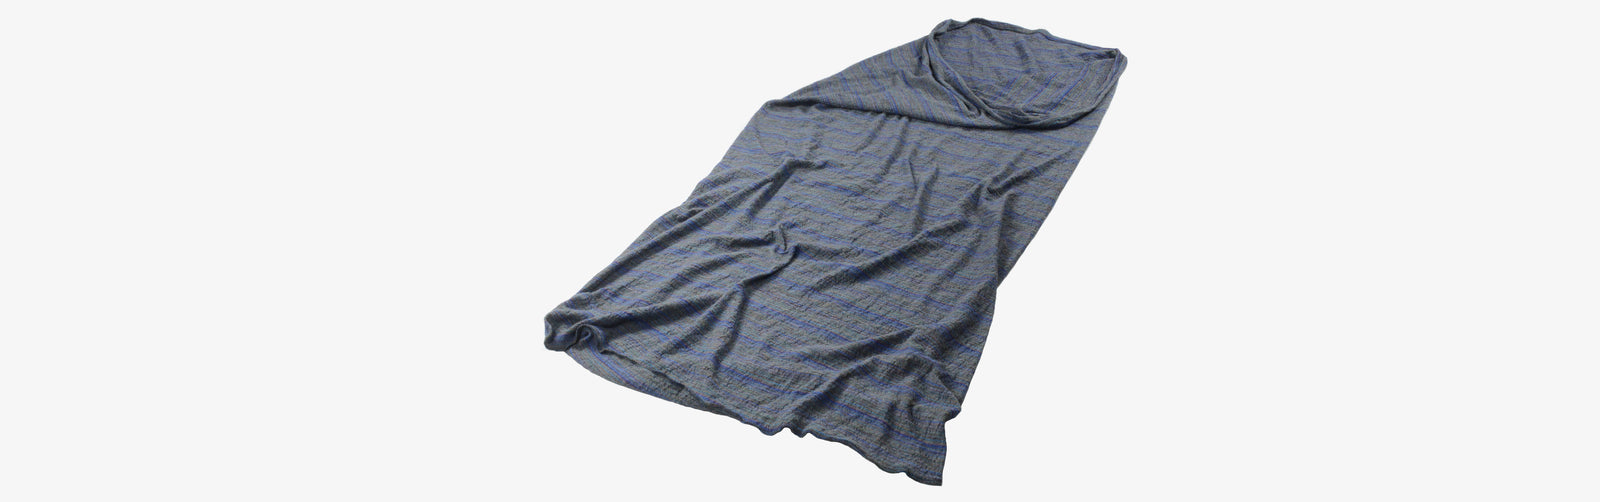 Meet the Product: All-Paca™ Sleeping Bag Liner